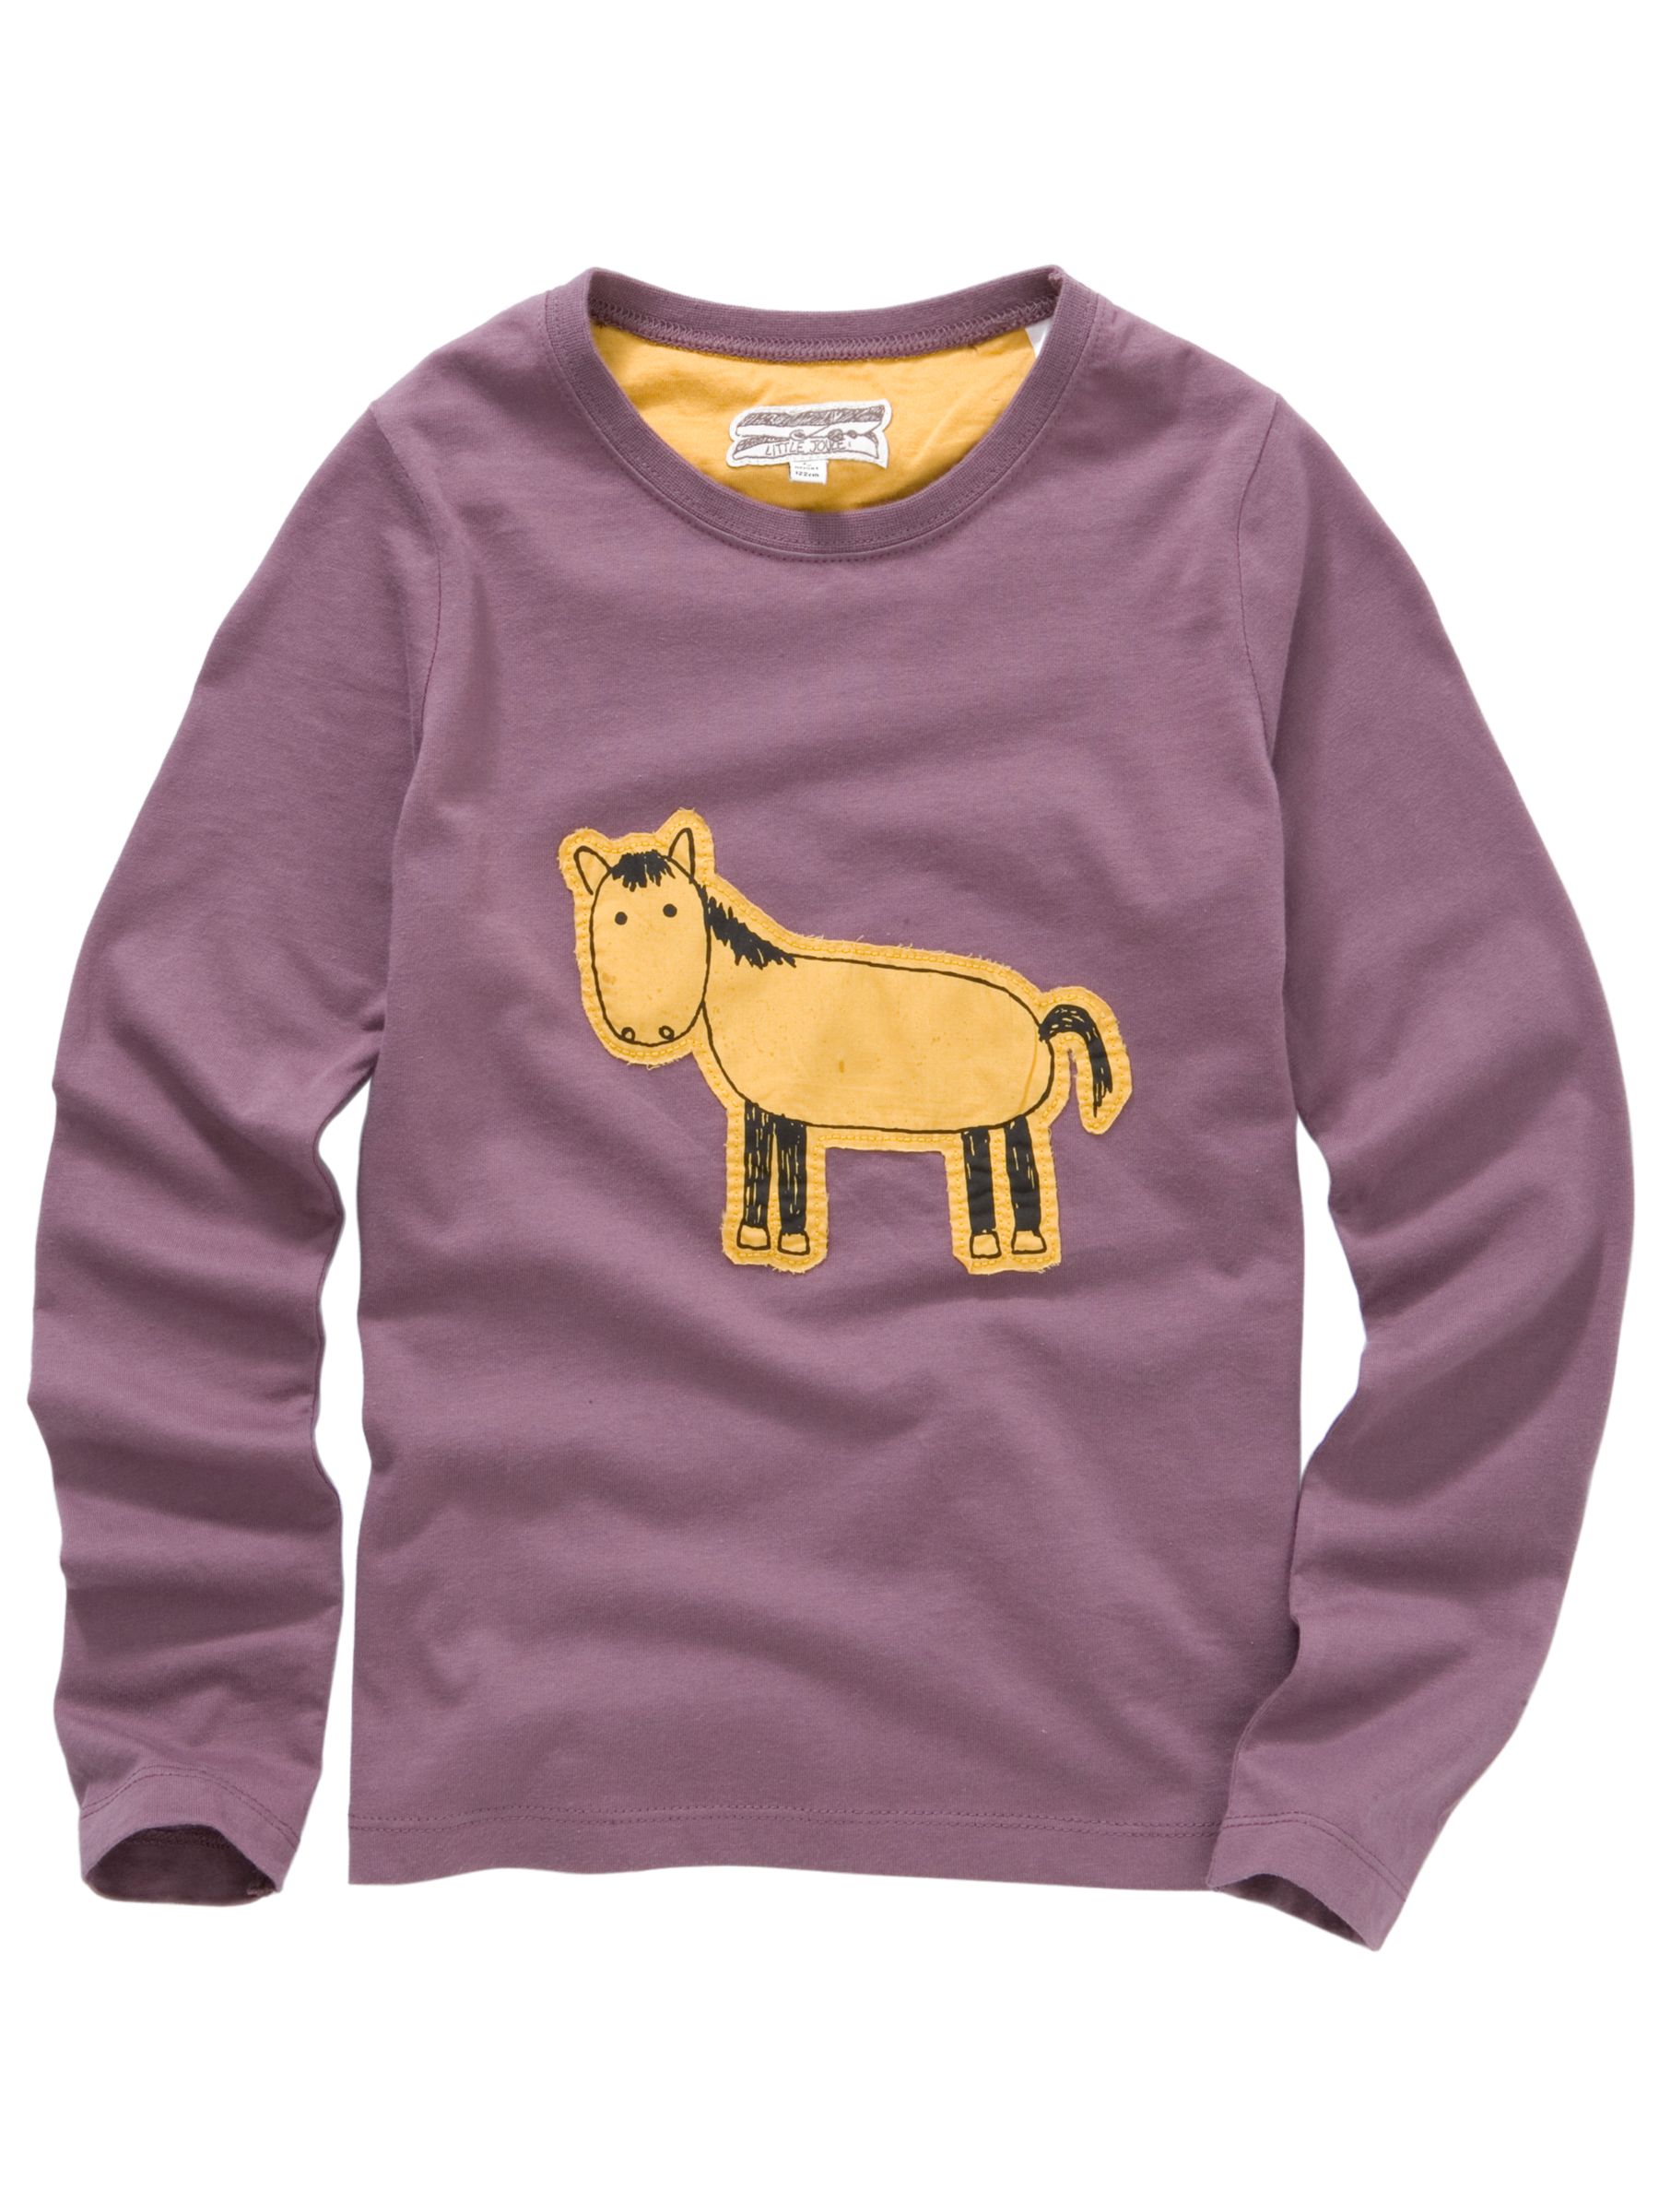 Horse Applique T-Shirt, Brown